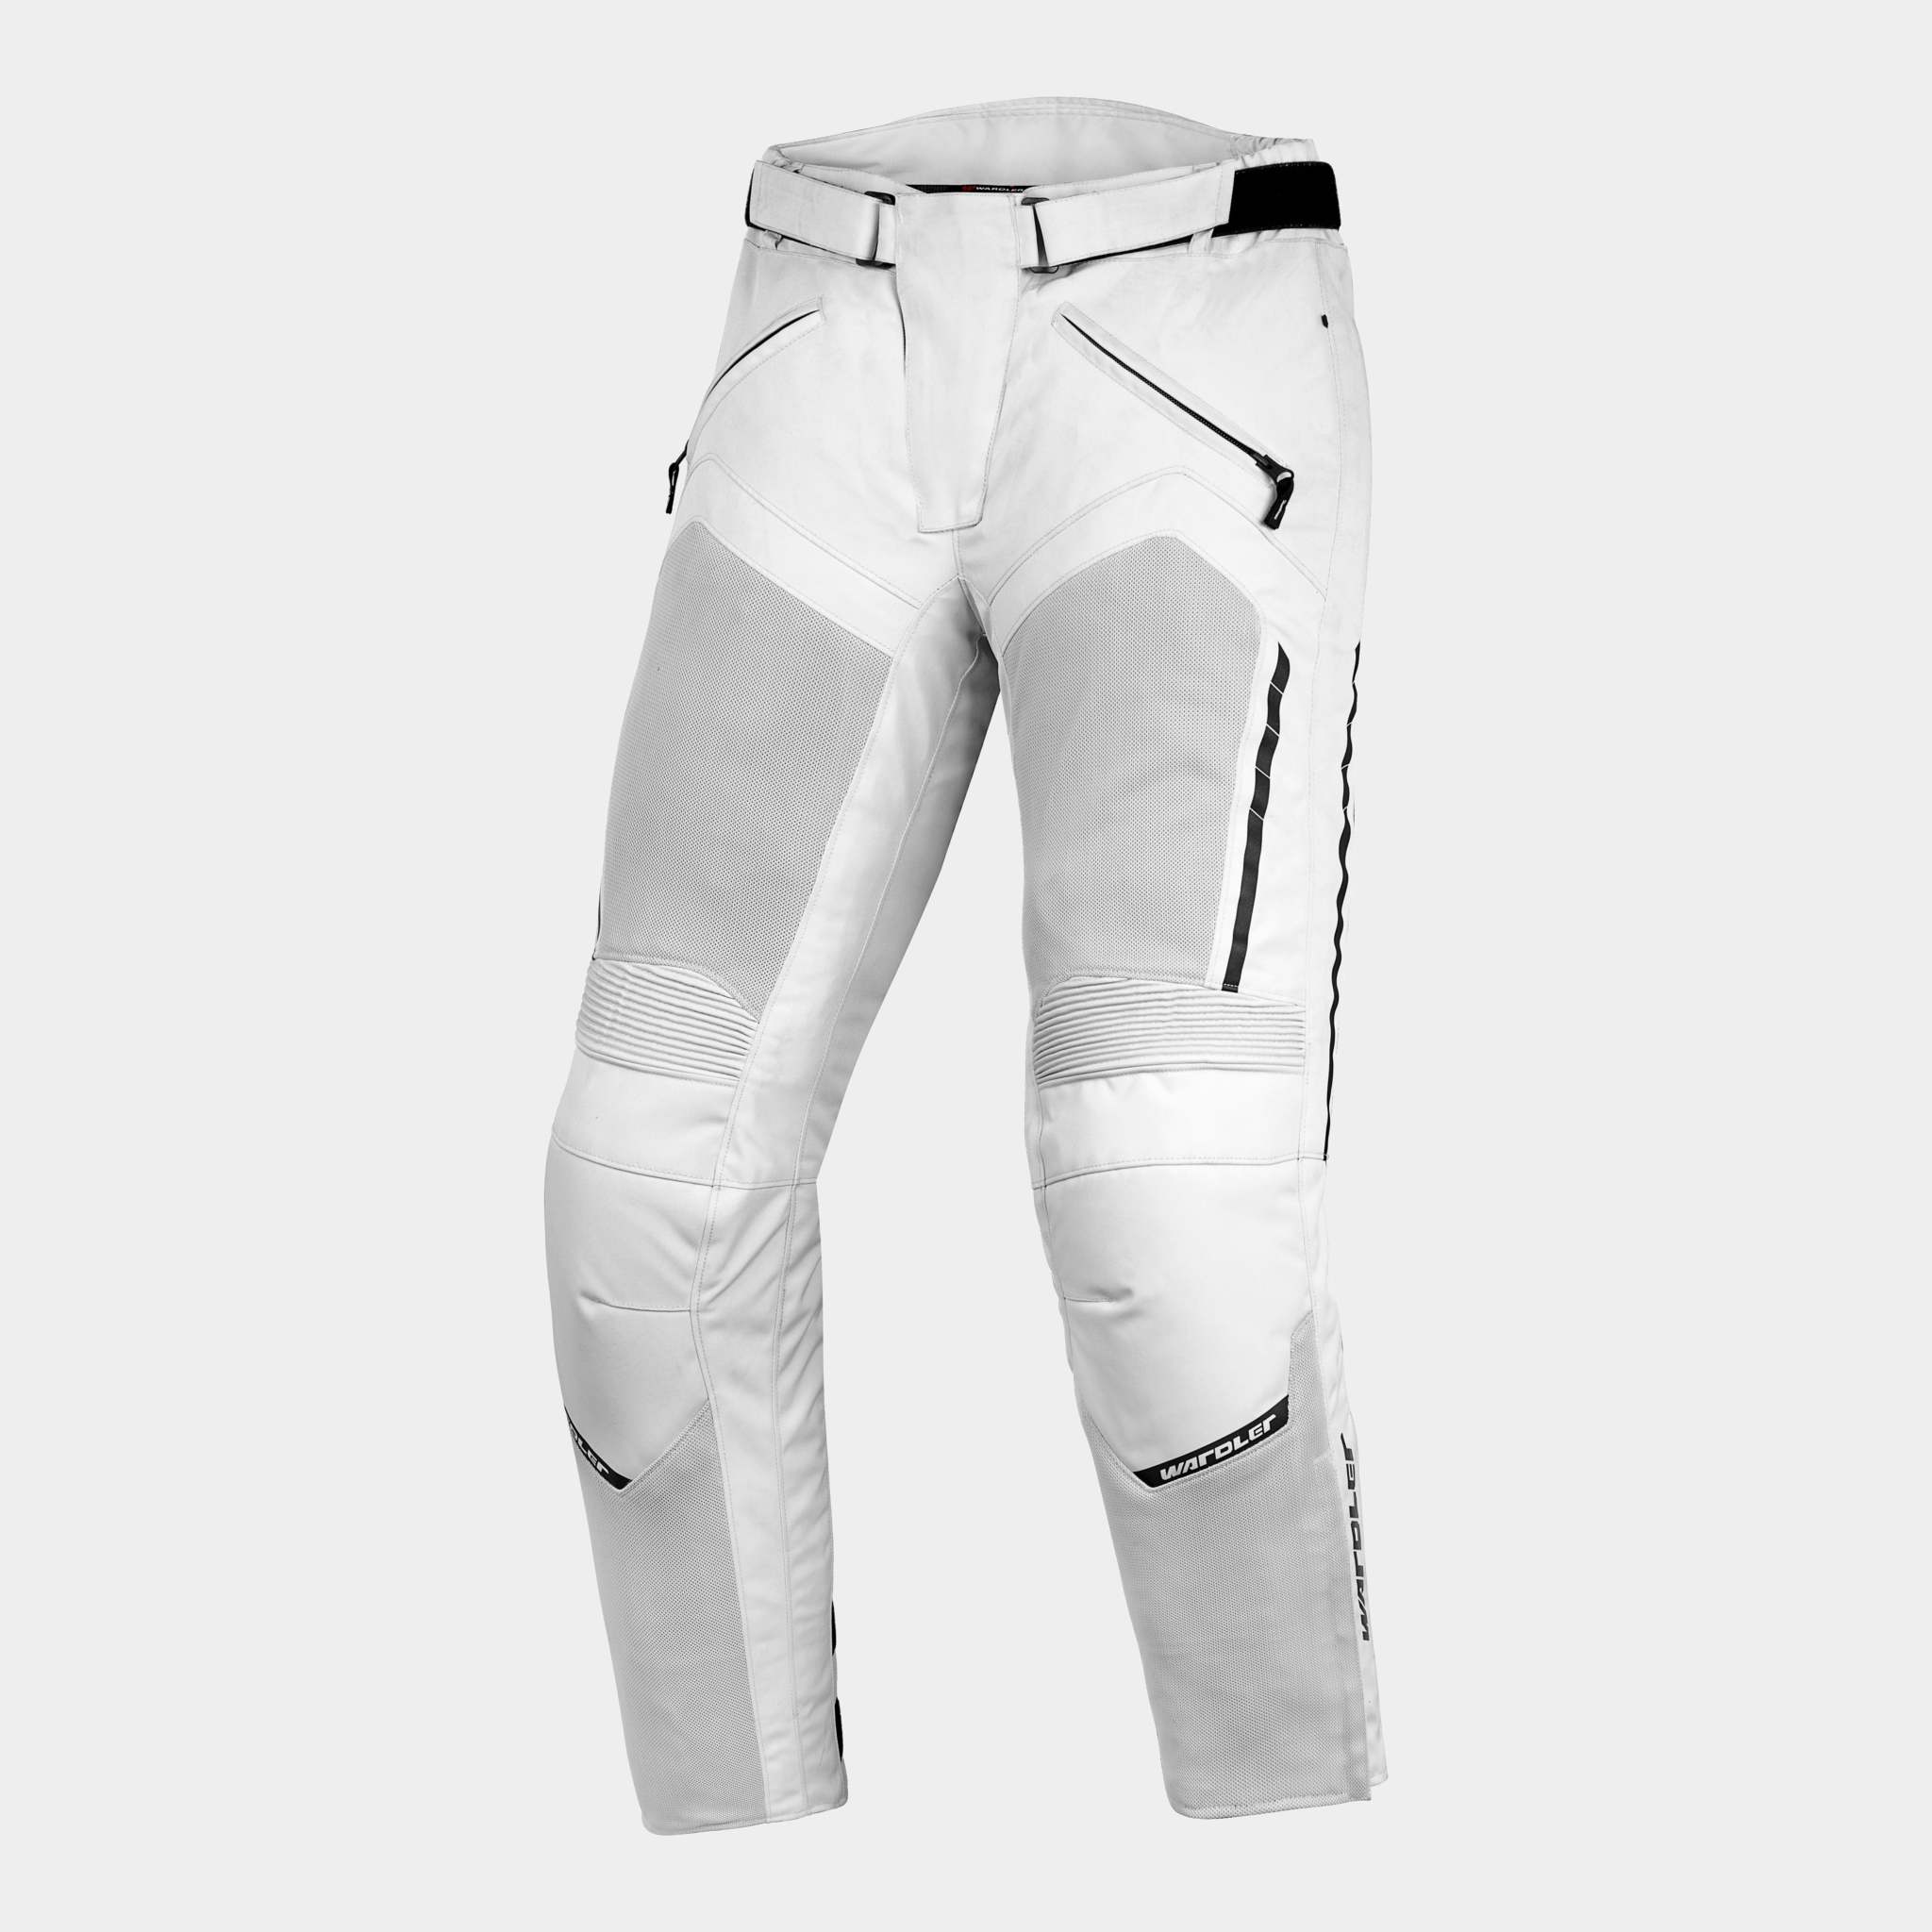 Mesh Summer Motorcycle Pants breathable waterproof silver pant front